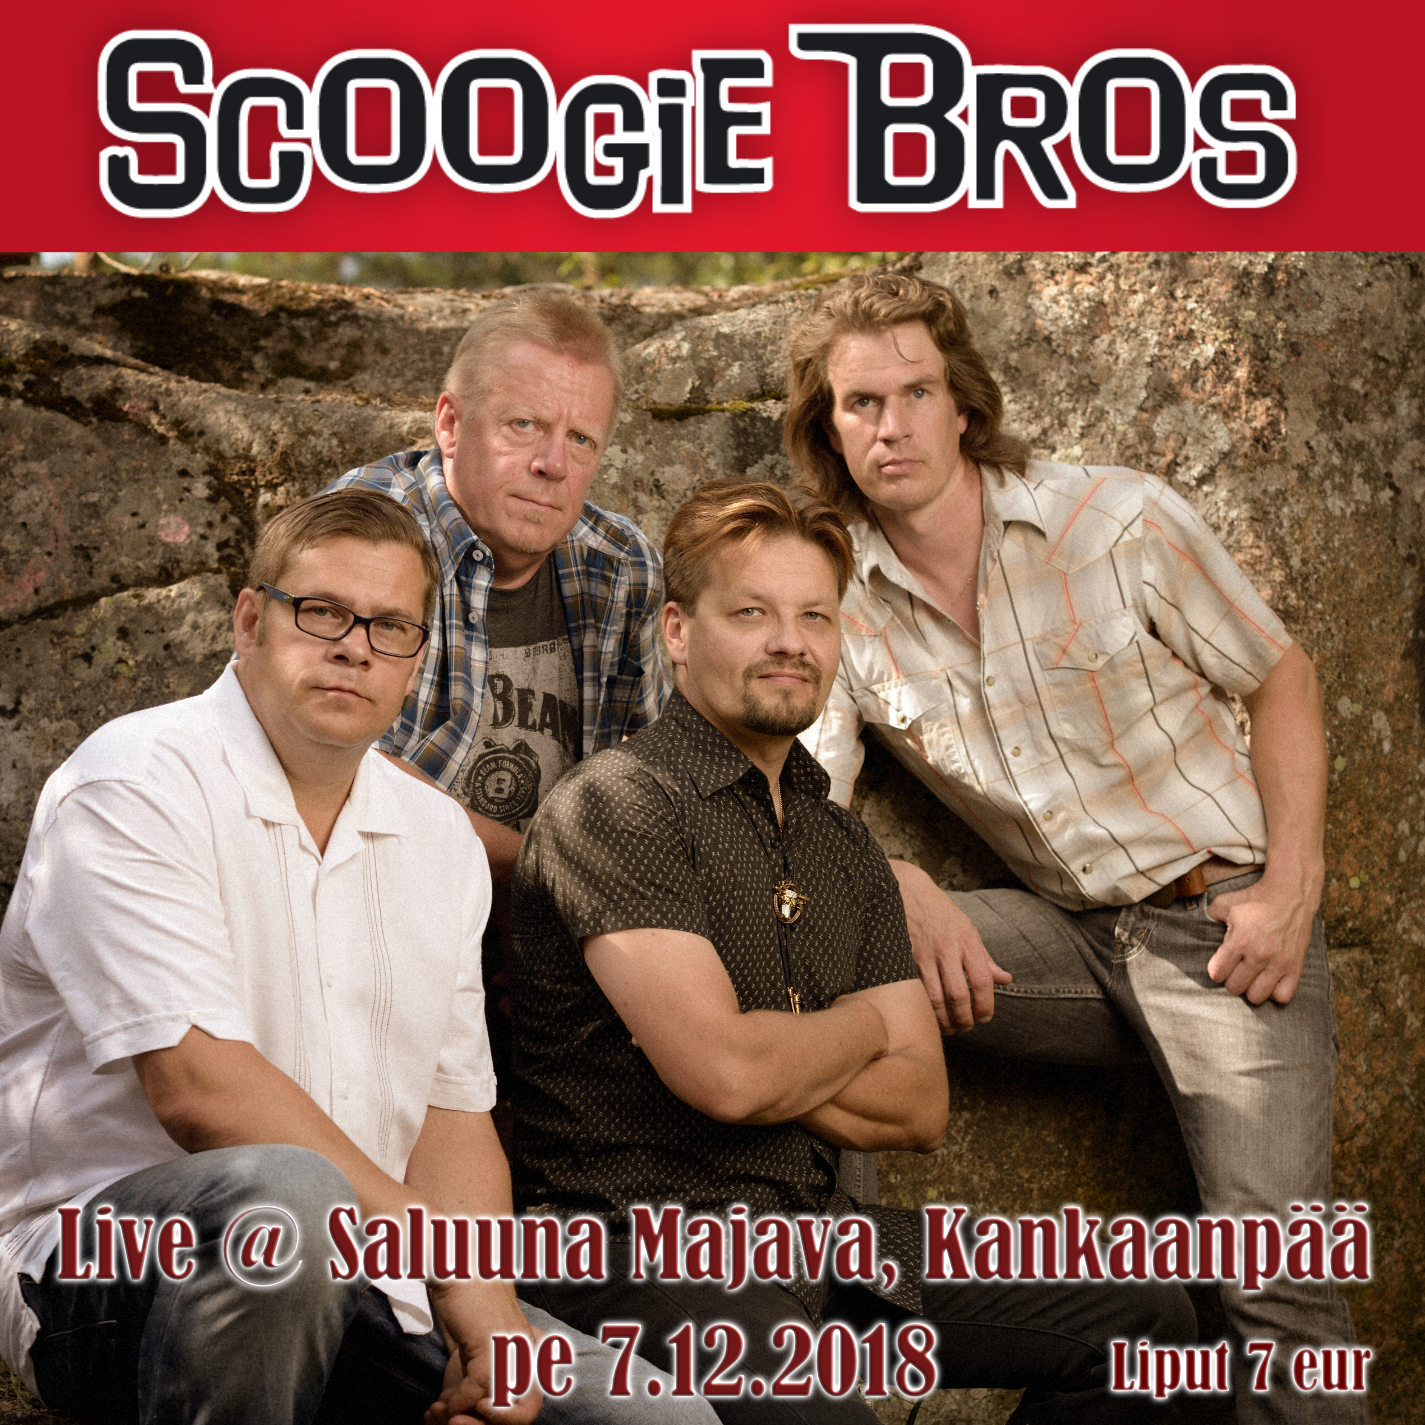 Scoogie Bros live @ Saluuna Majava, Kankaanpää pe 7.12.2018